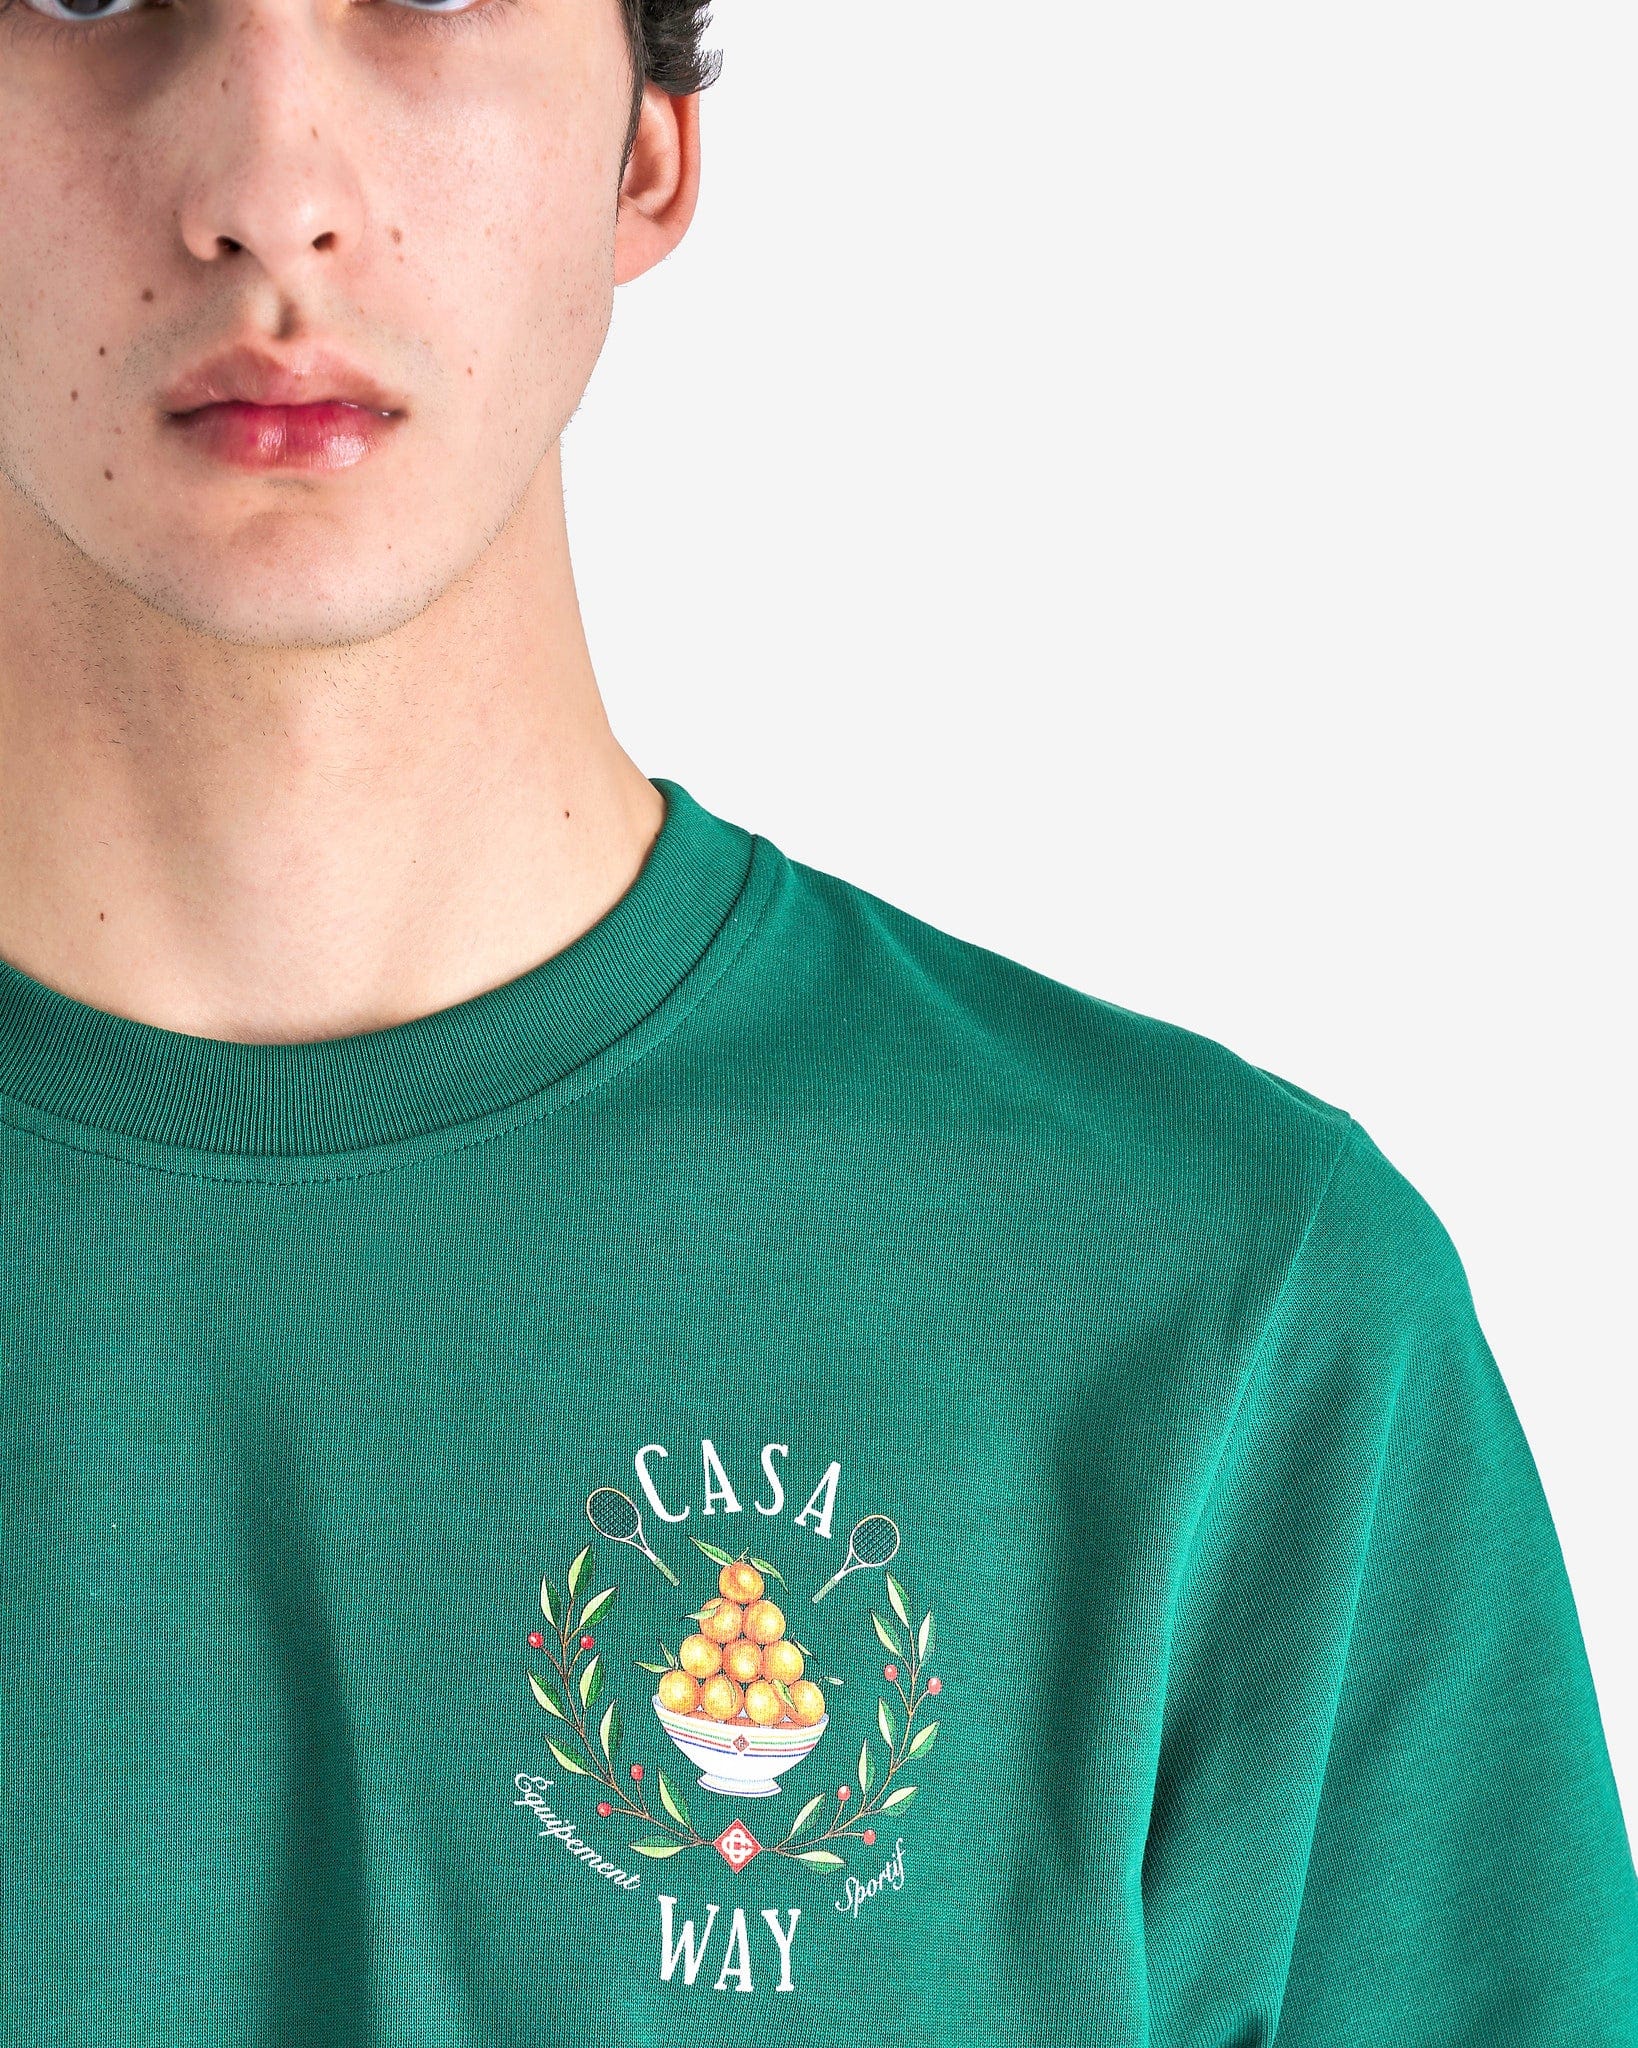 Casablanca Men's T-Shirts Casa Way Printed T-Shirt in Evergreen